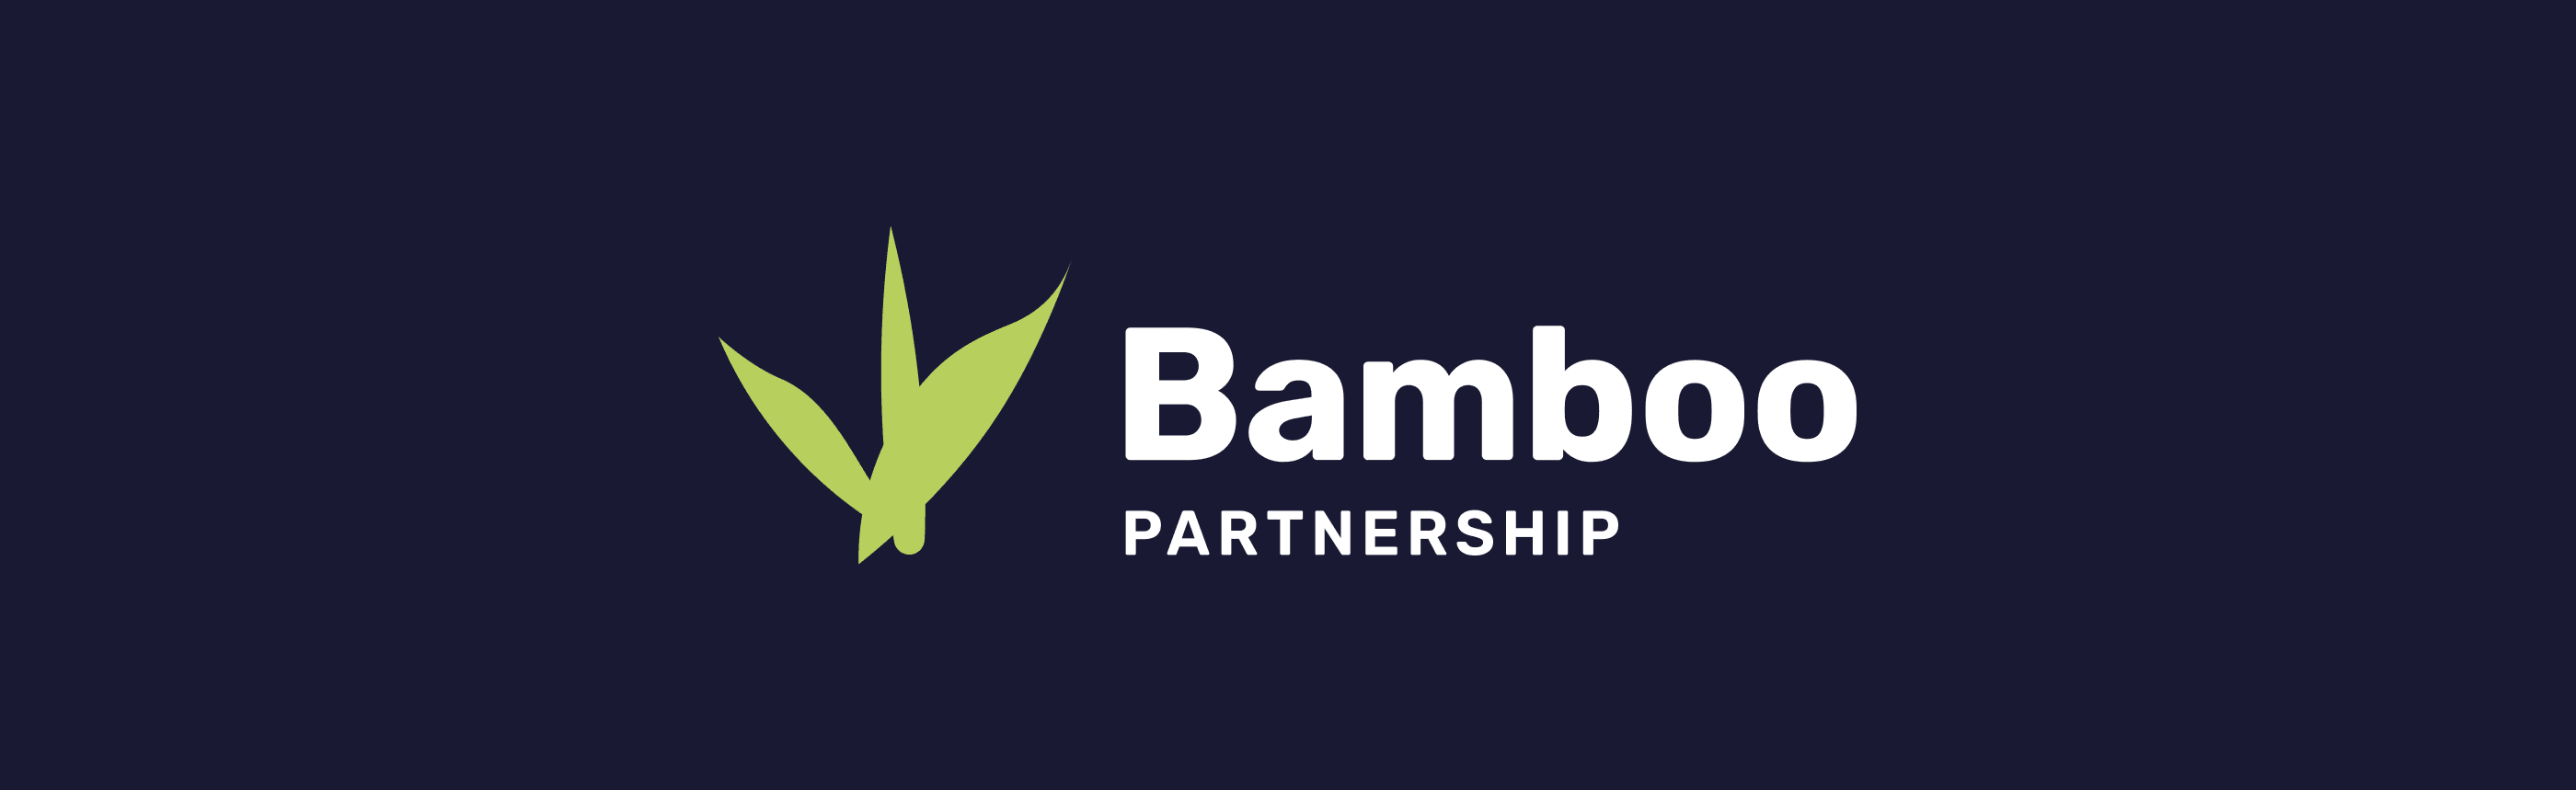 Bamboo Partnership Logo